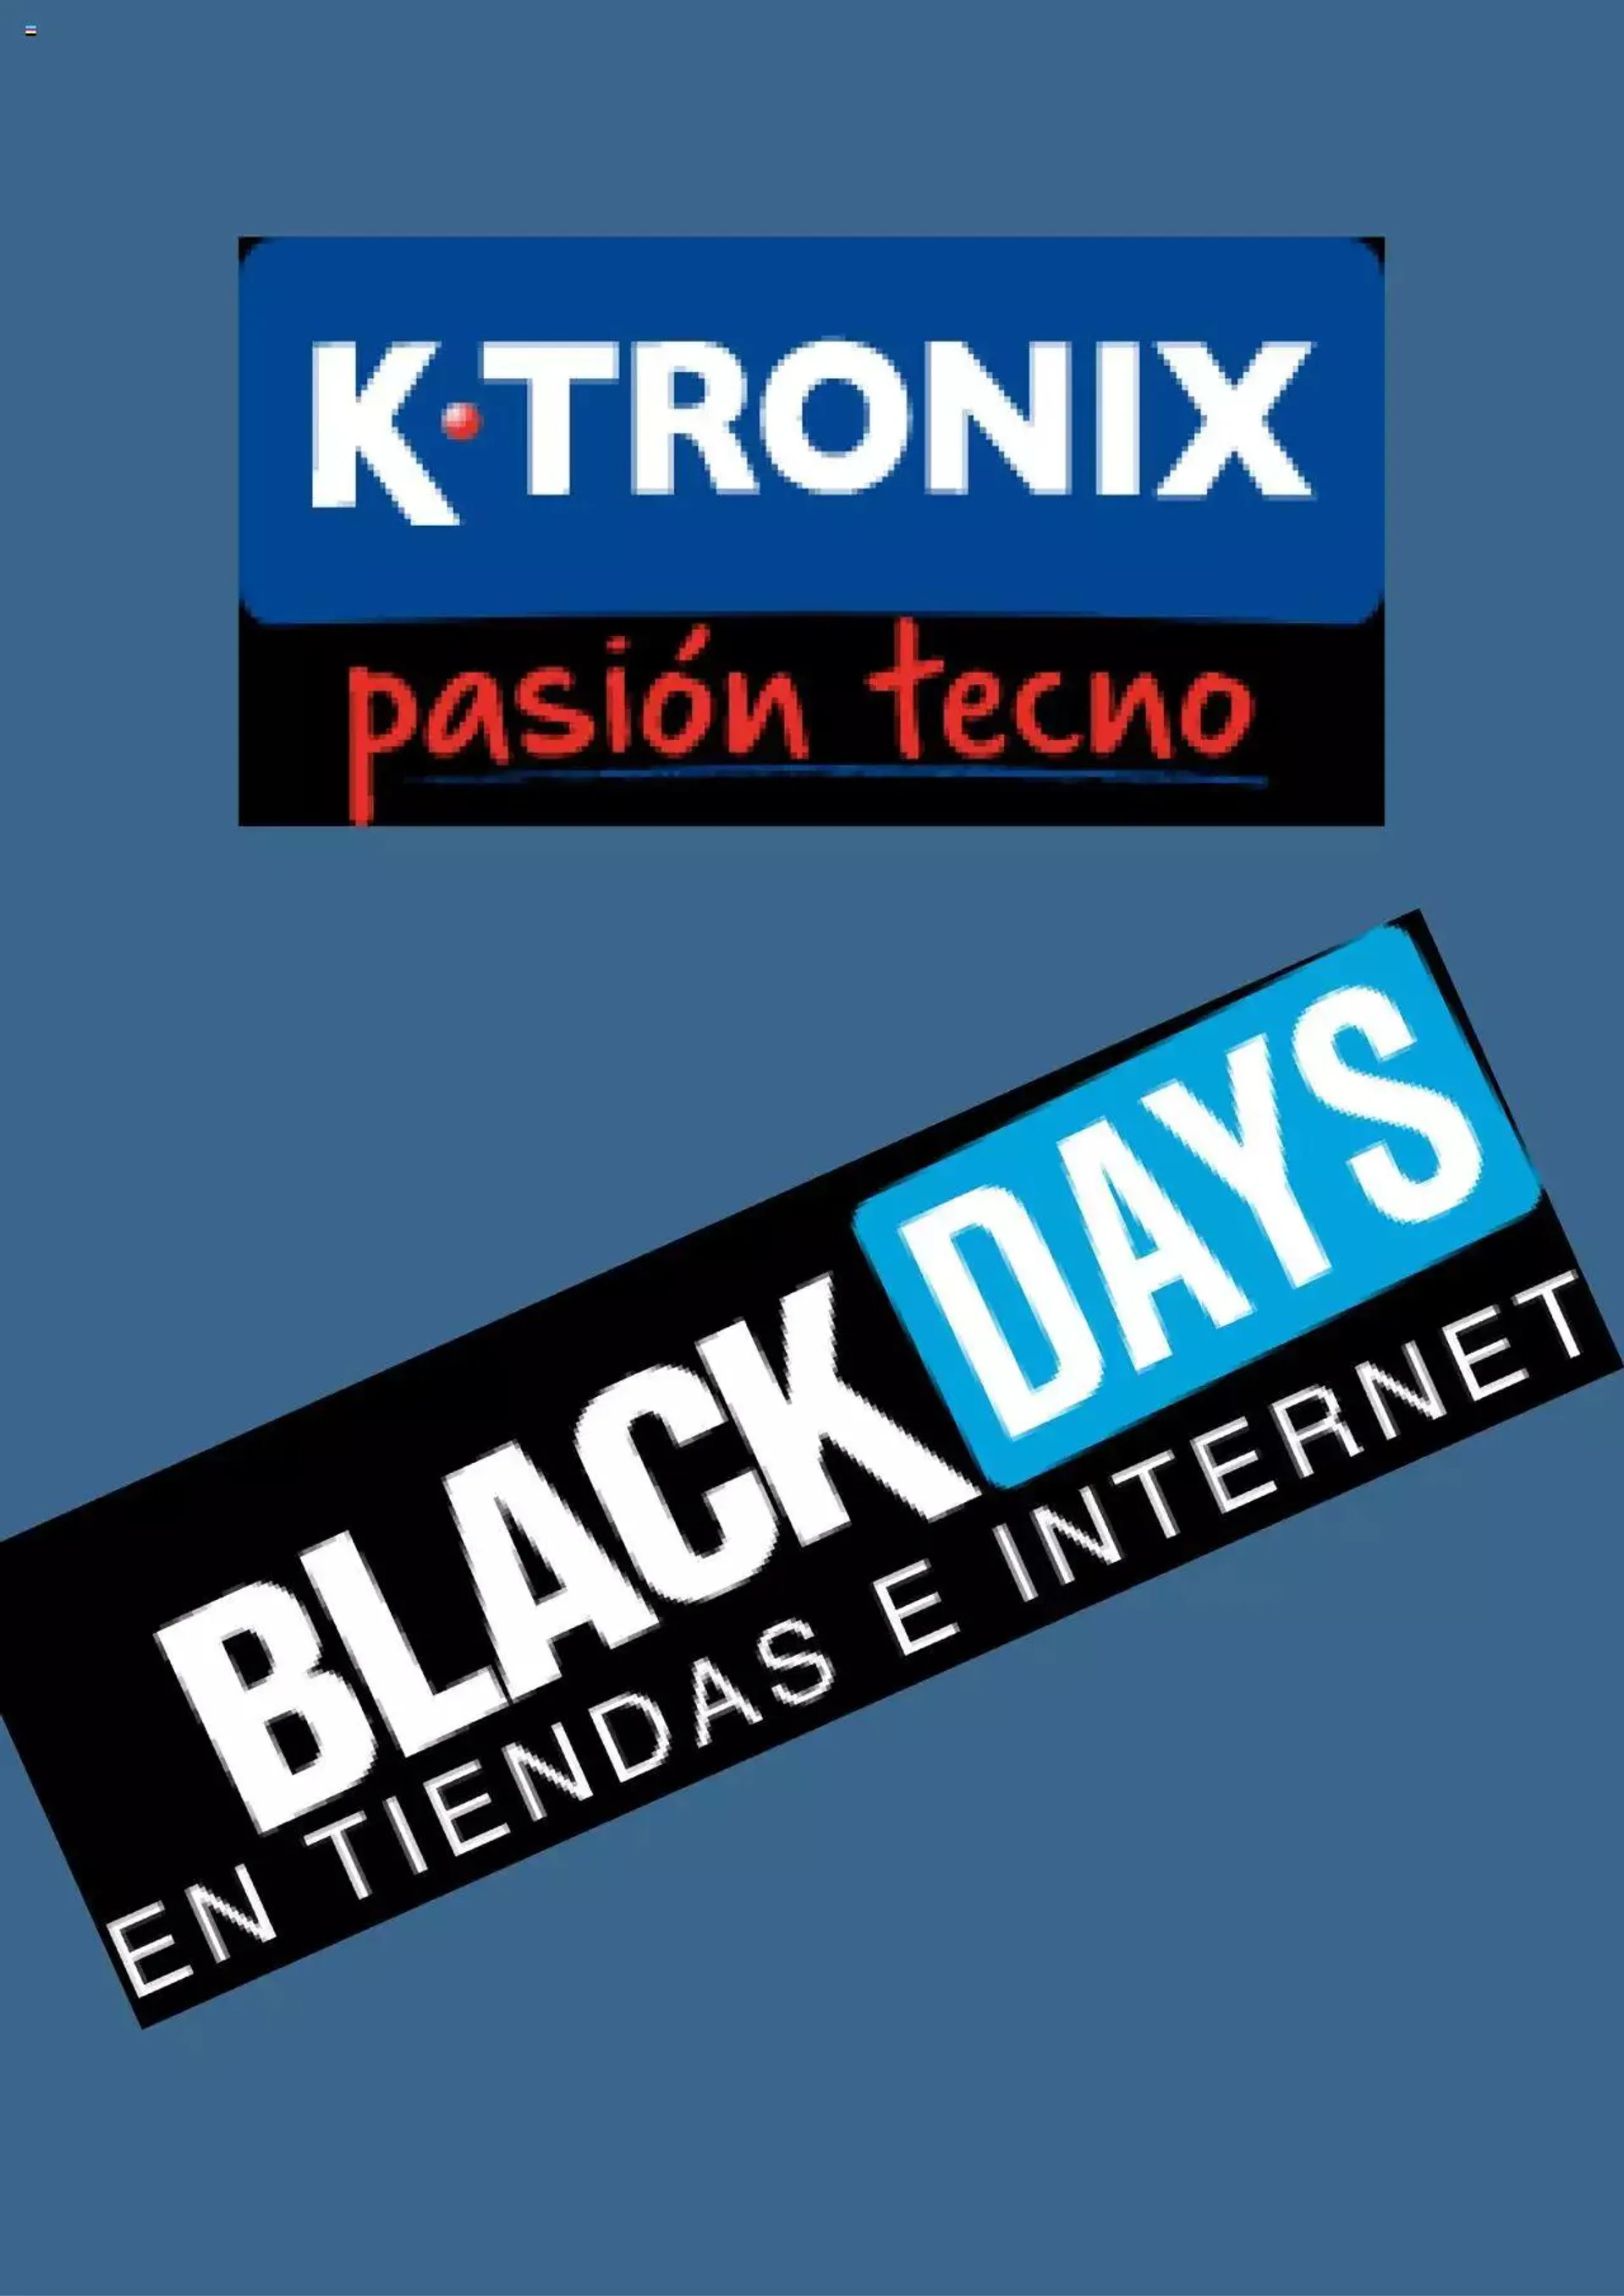 Ktronix - Black Days - 0